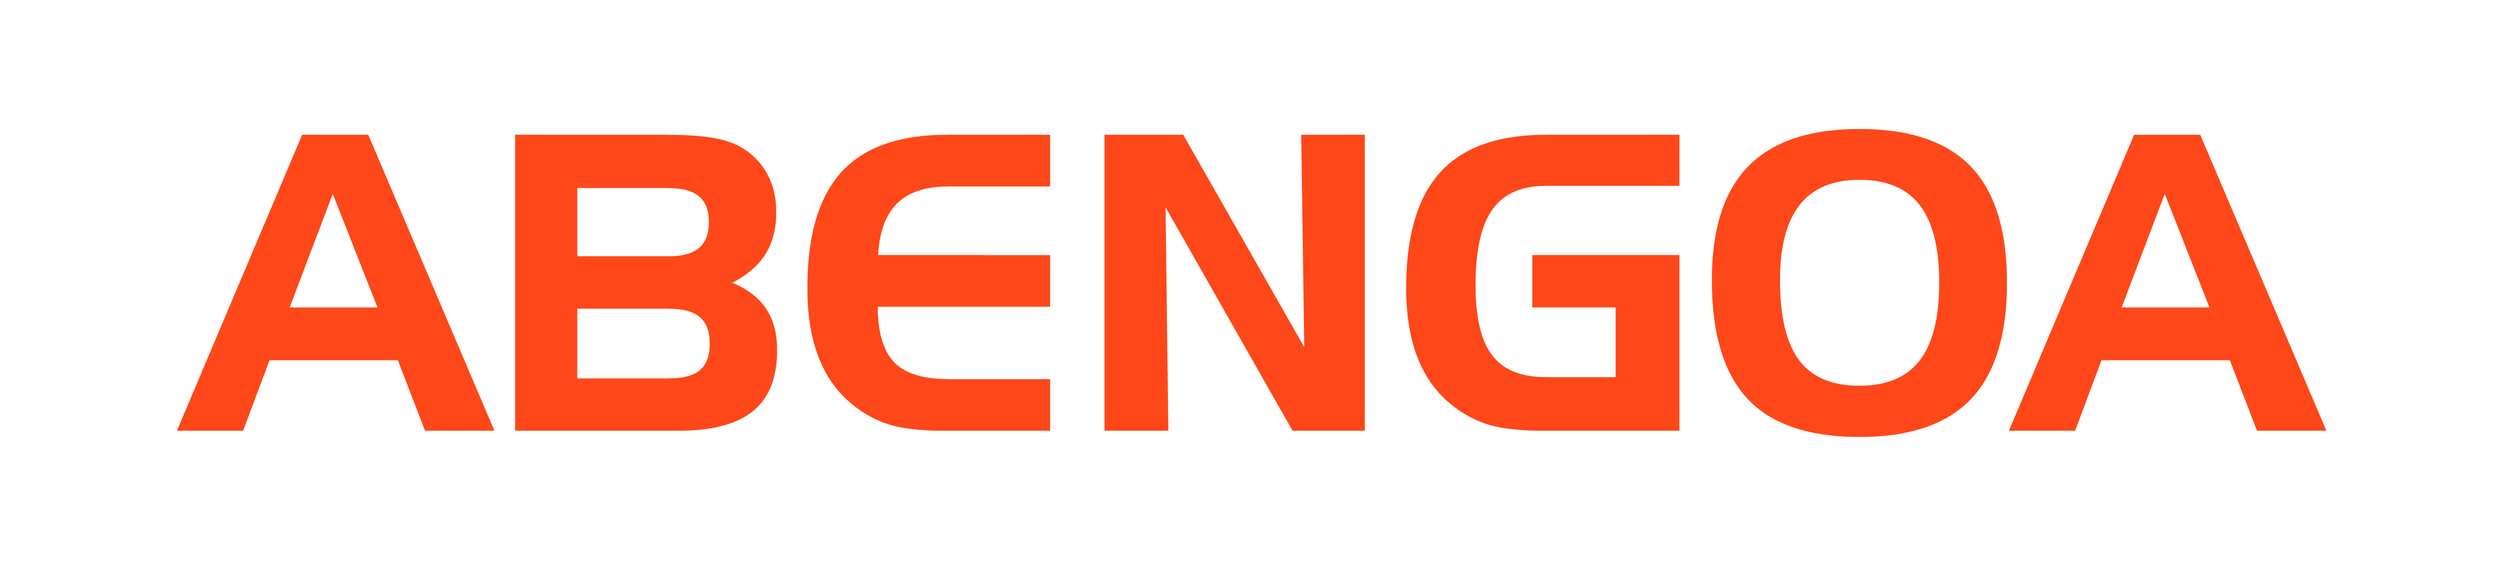 Abengoa-logo.jpg